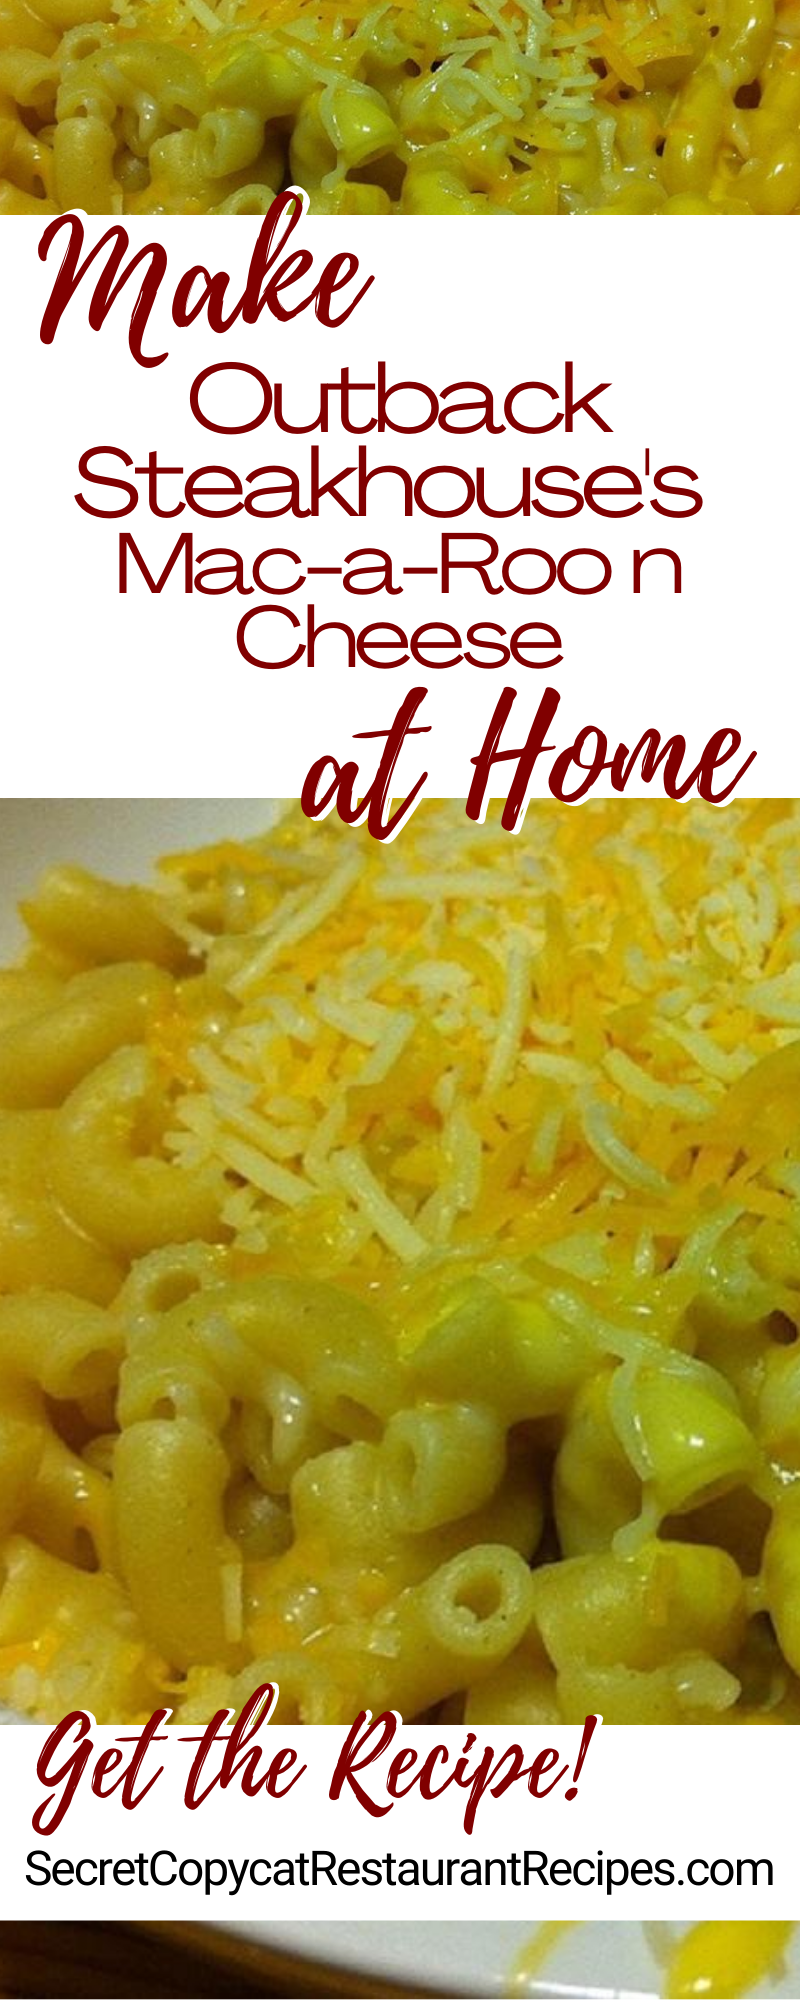 Outback Steakhouse’s Mac-A-Roo n’ Cheese Recipe